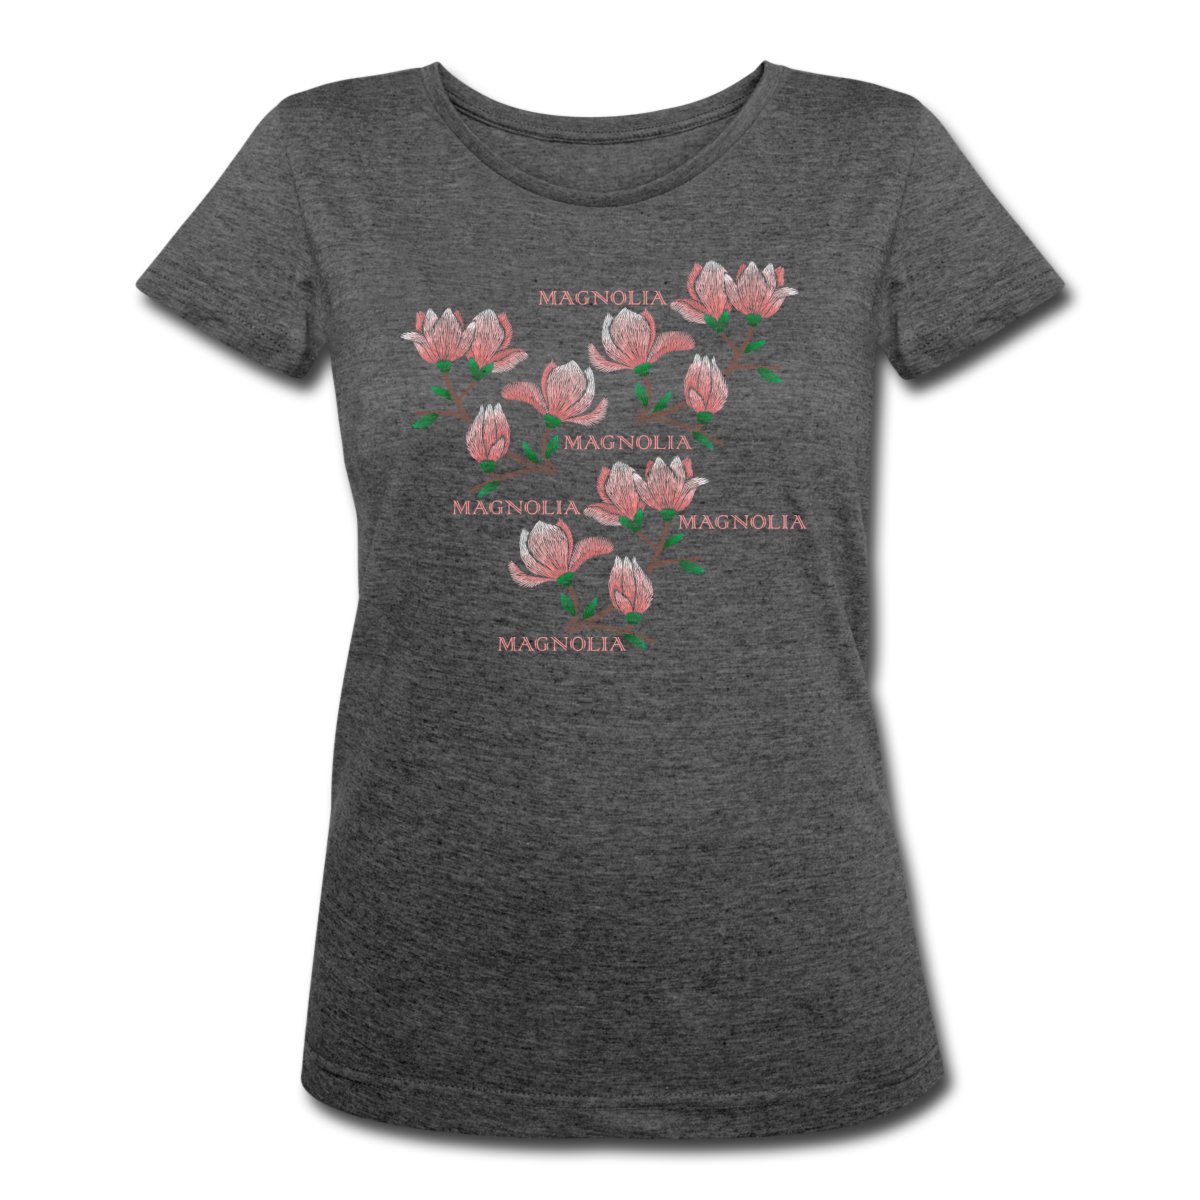 magnolia-polycotton-t-shirt-dam-mg.jpg